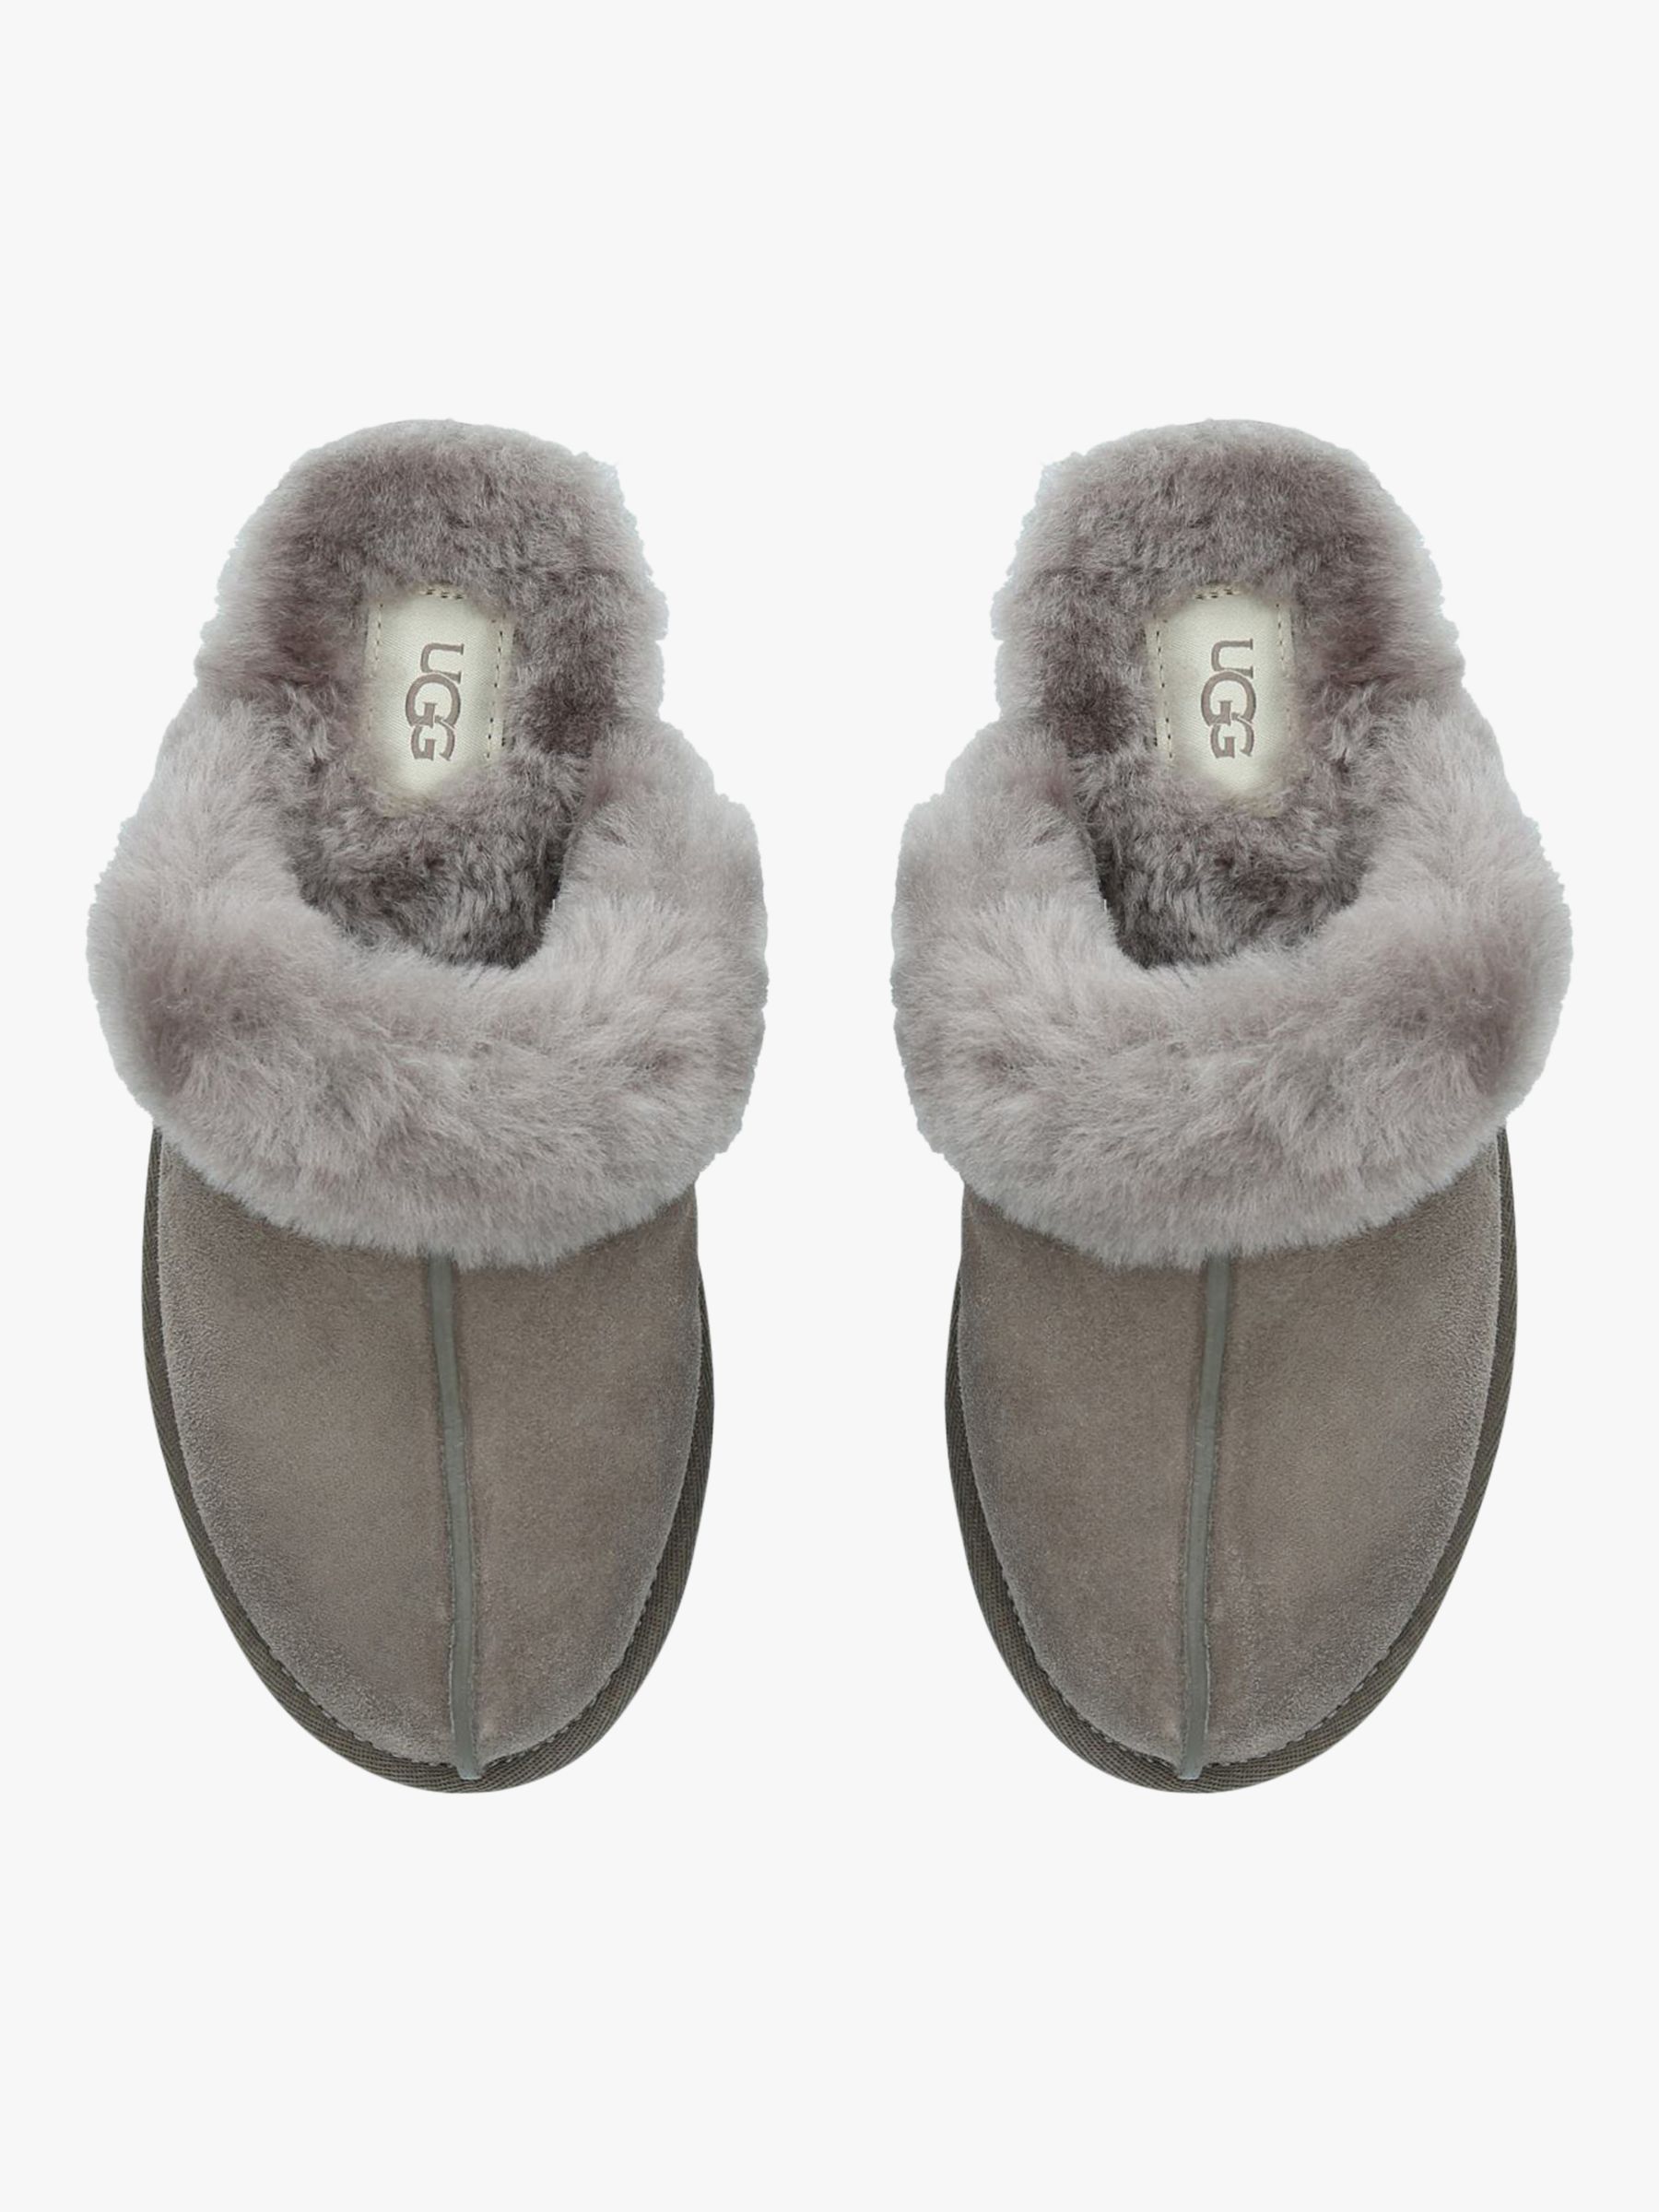 ugg grey scuffette slippers